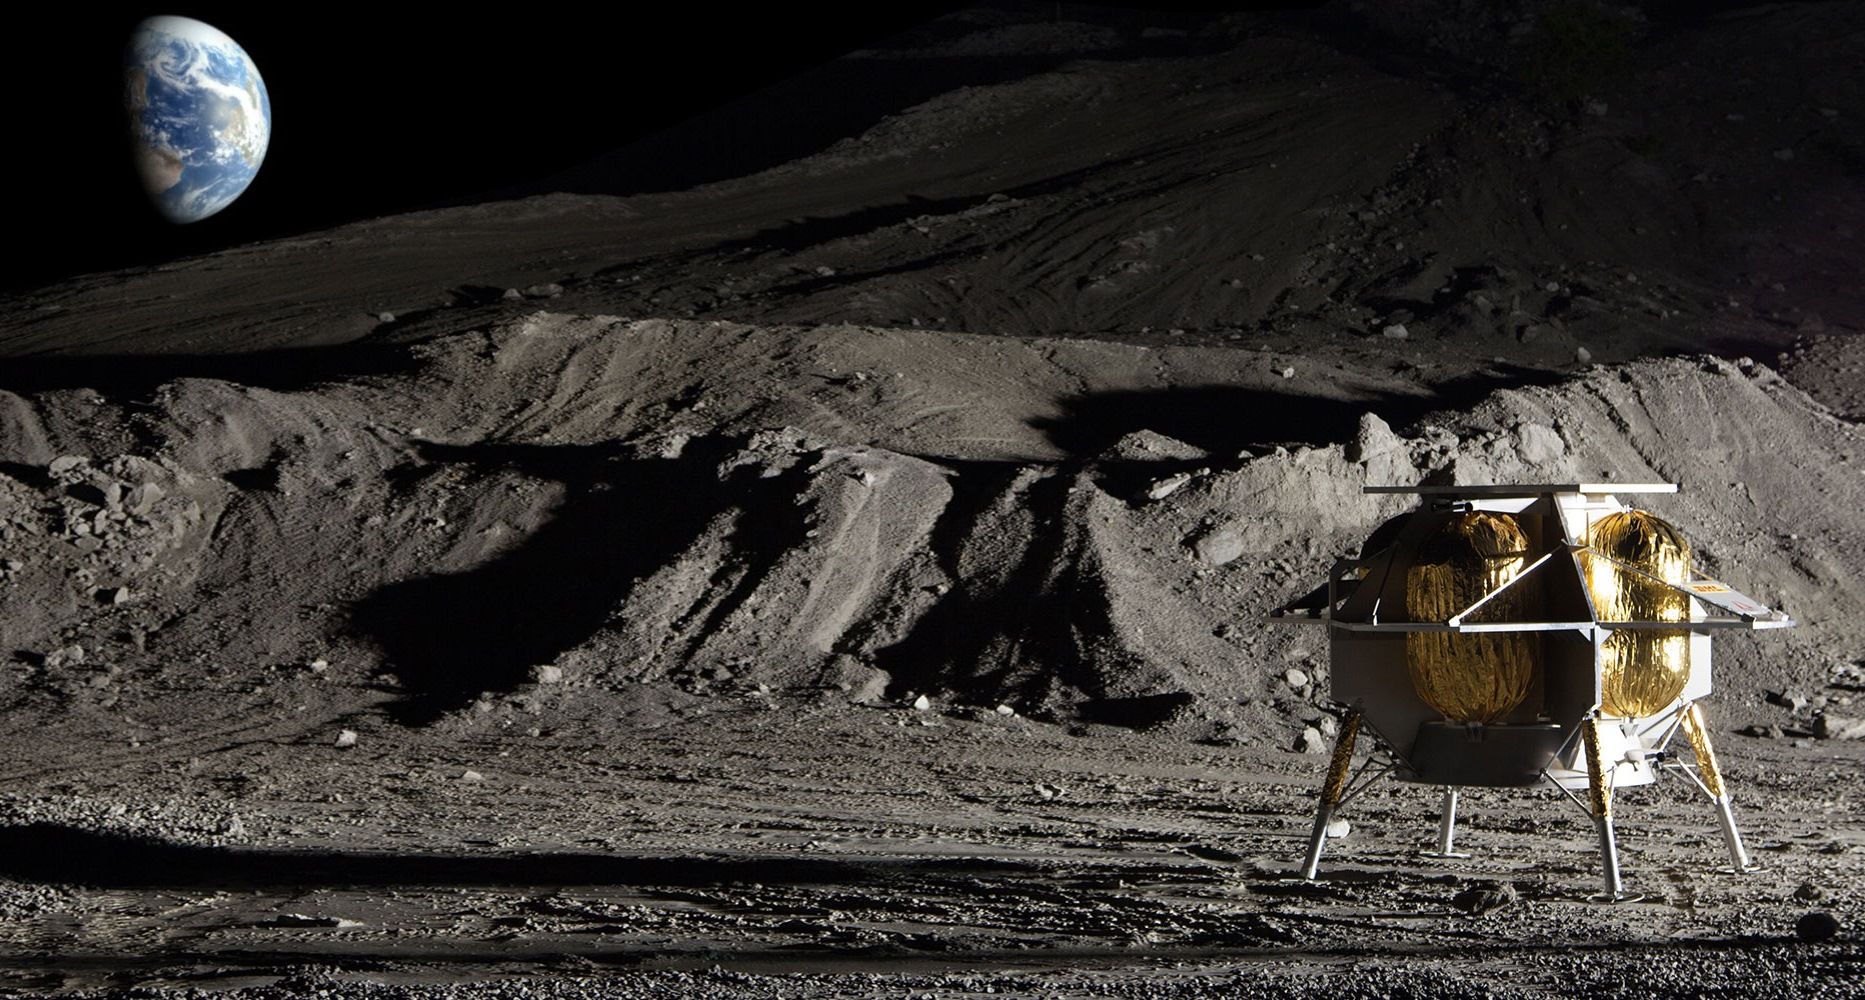 Lunar commercial missions with astrobotic peregrine lander